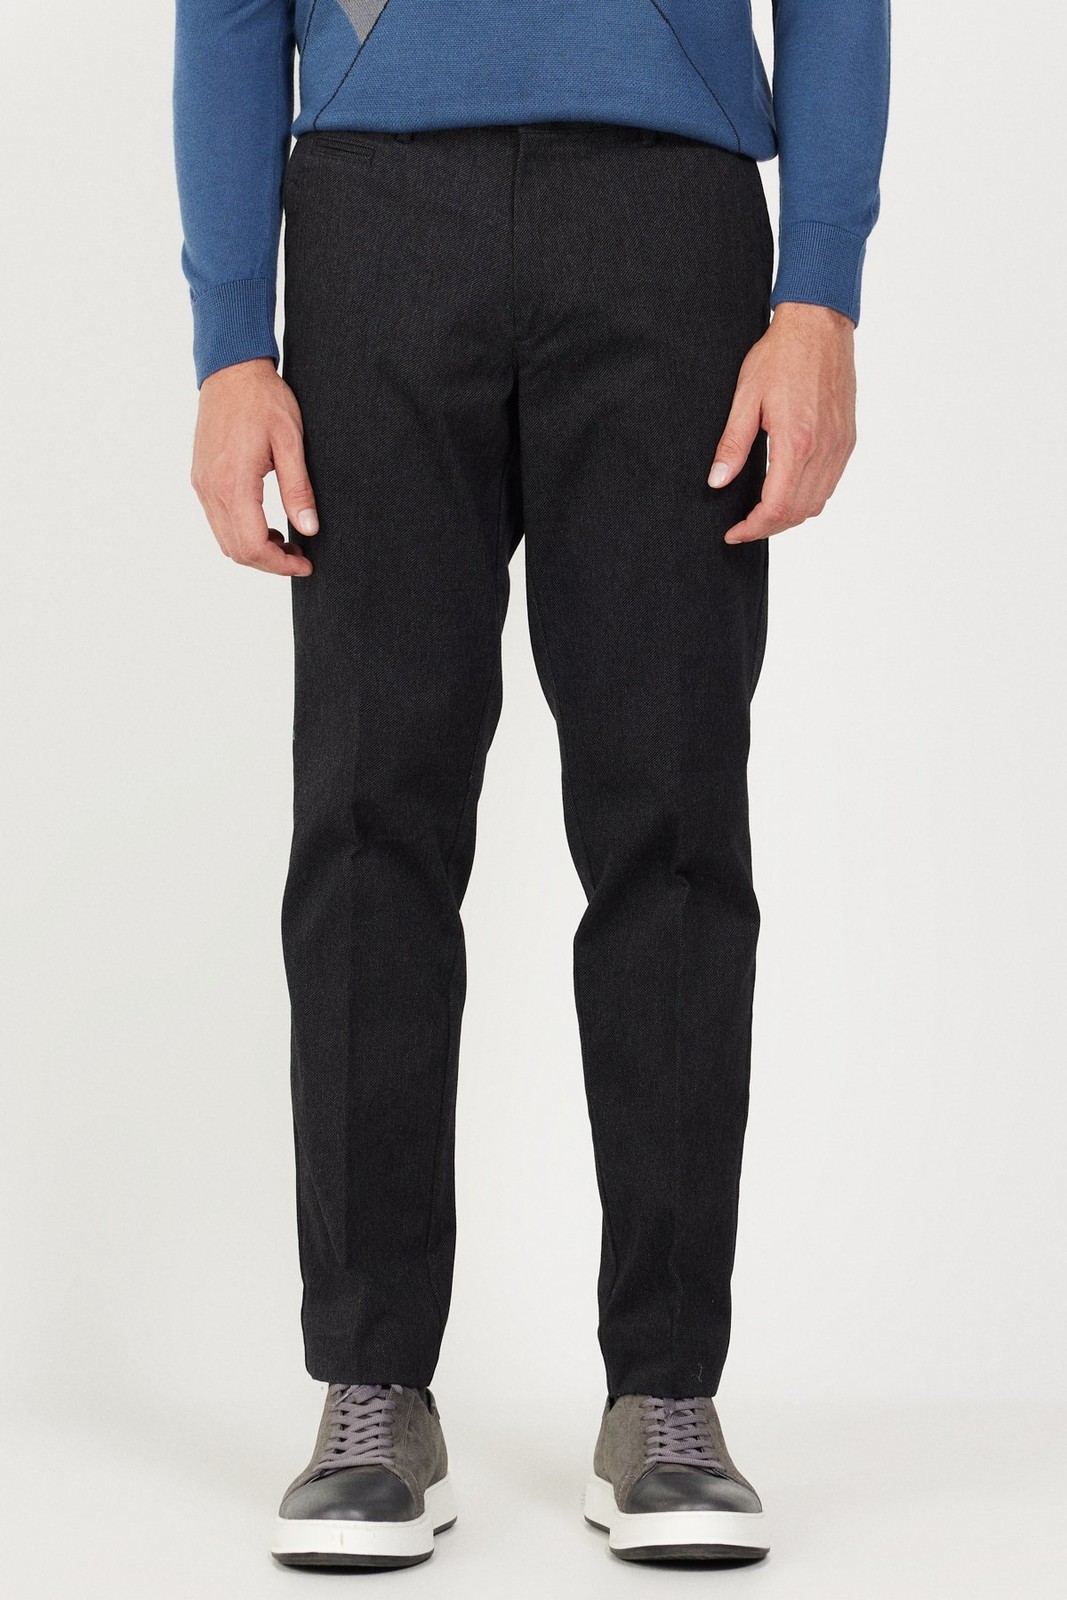 ALTINYILDIZ CLASSICS Men's Black Comfort Fit Relaxed Cut Side Pocket Cotton Diagonal Patterned Trousers